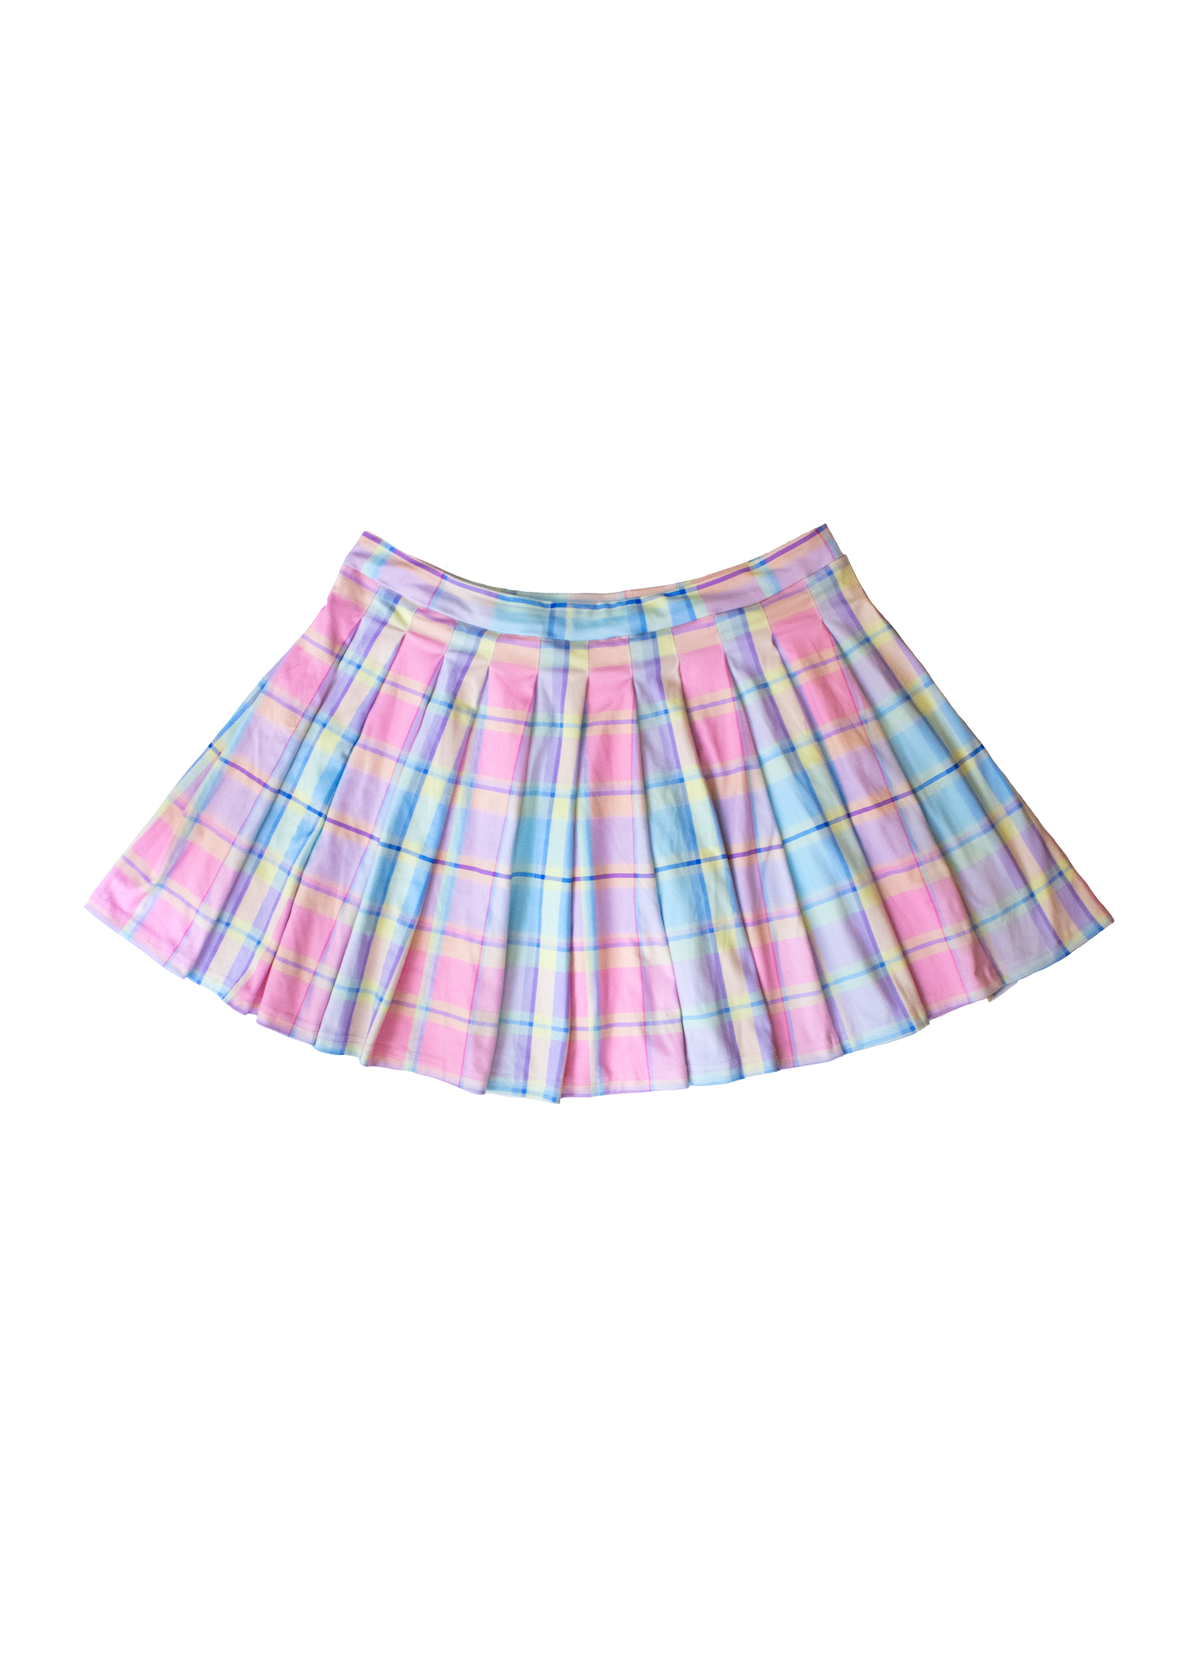 S plaid pleated mini skirt in konpeito